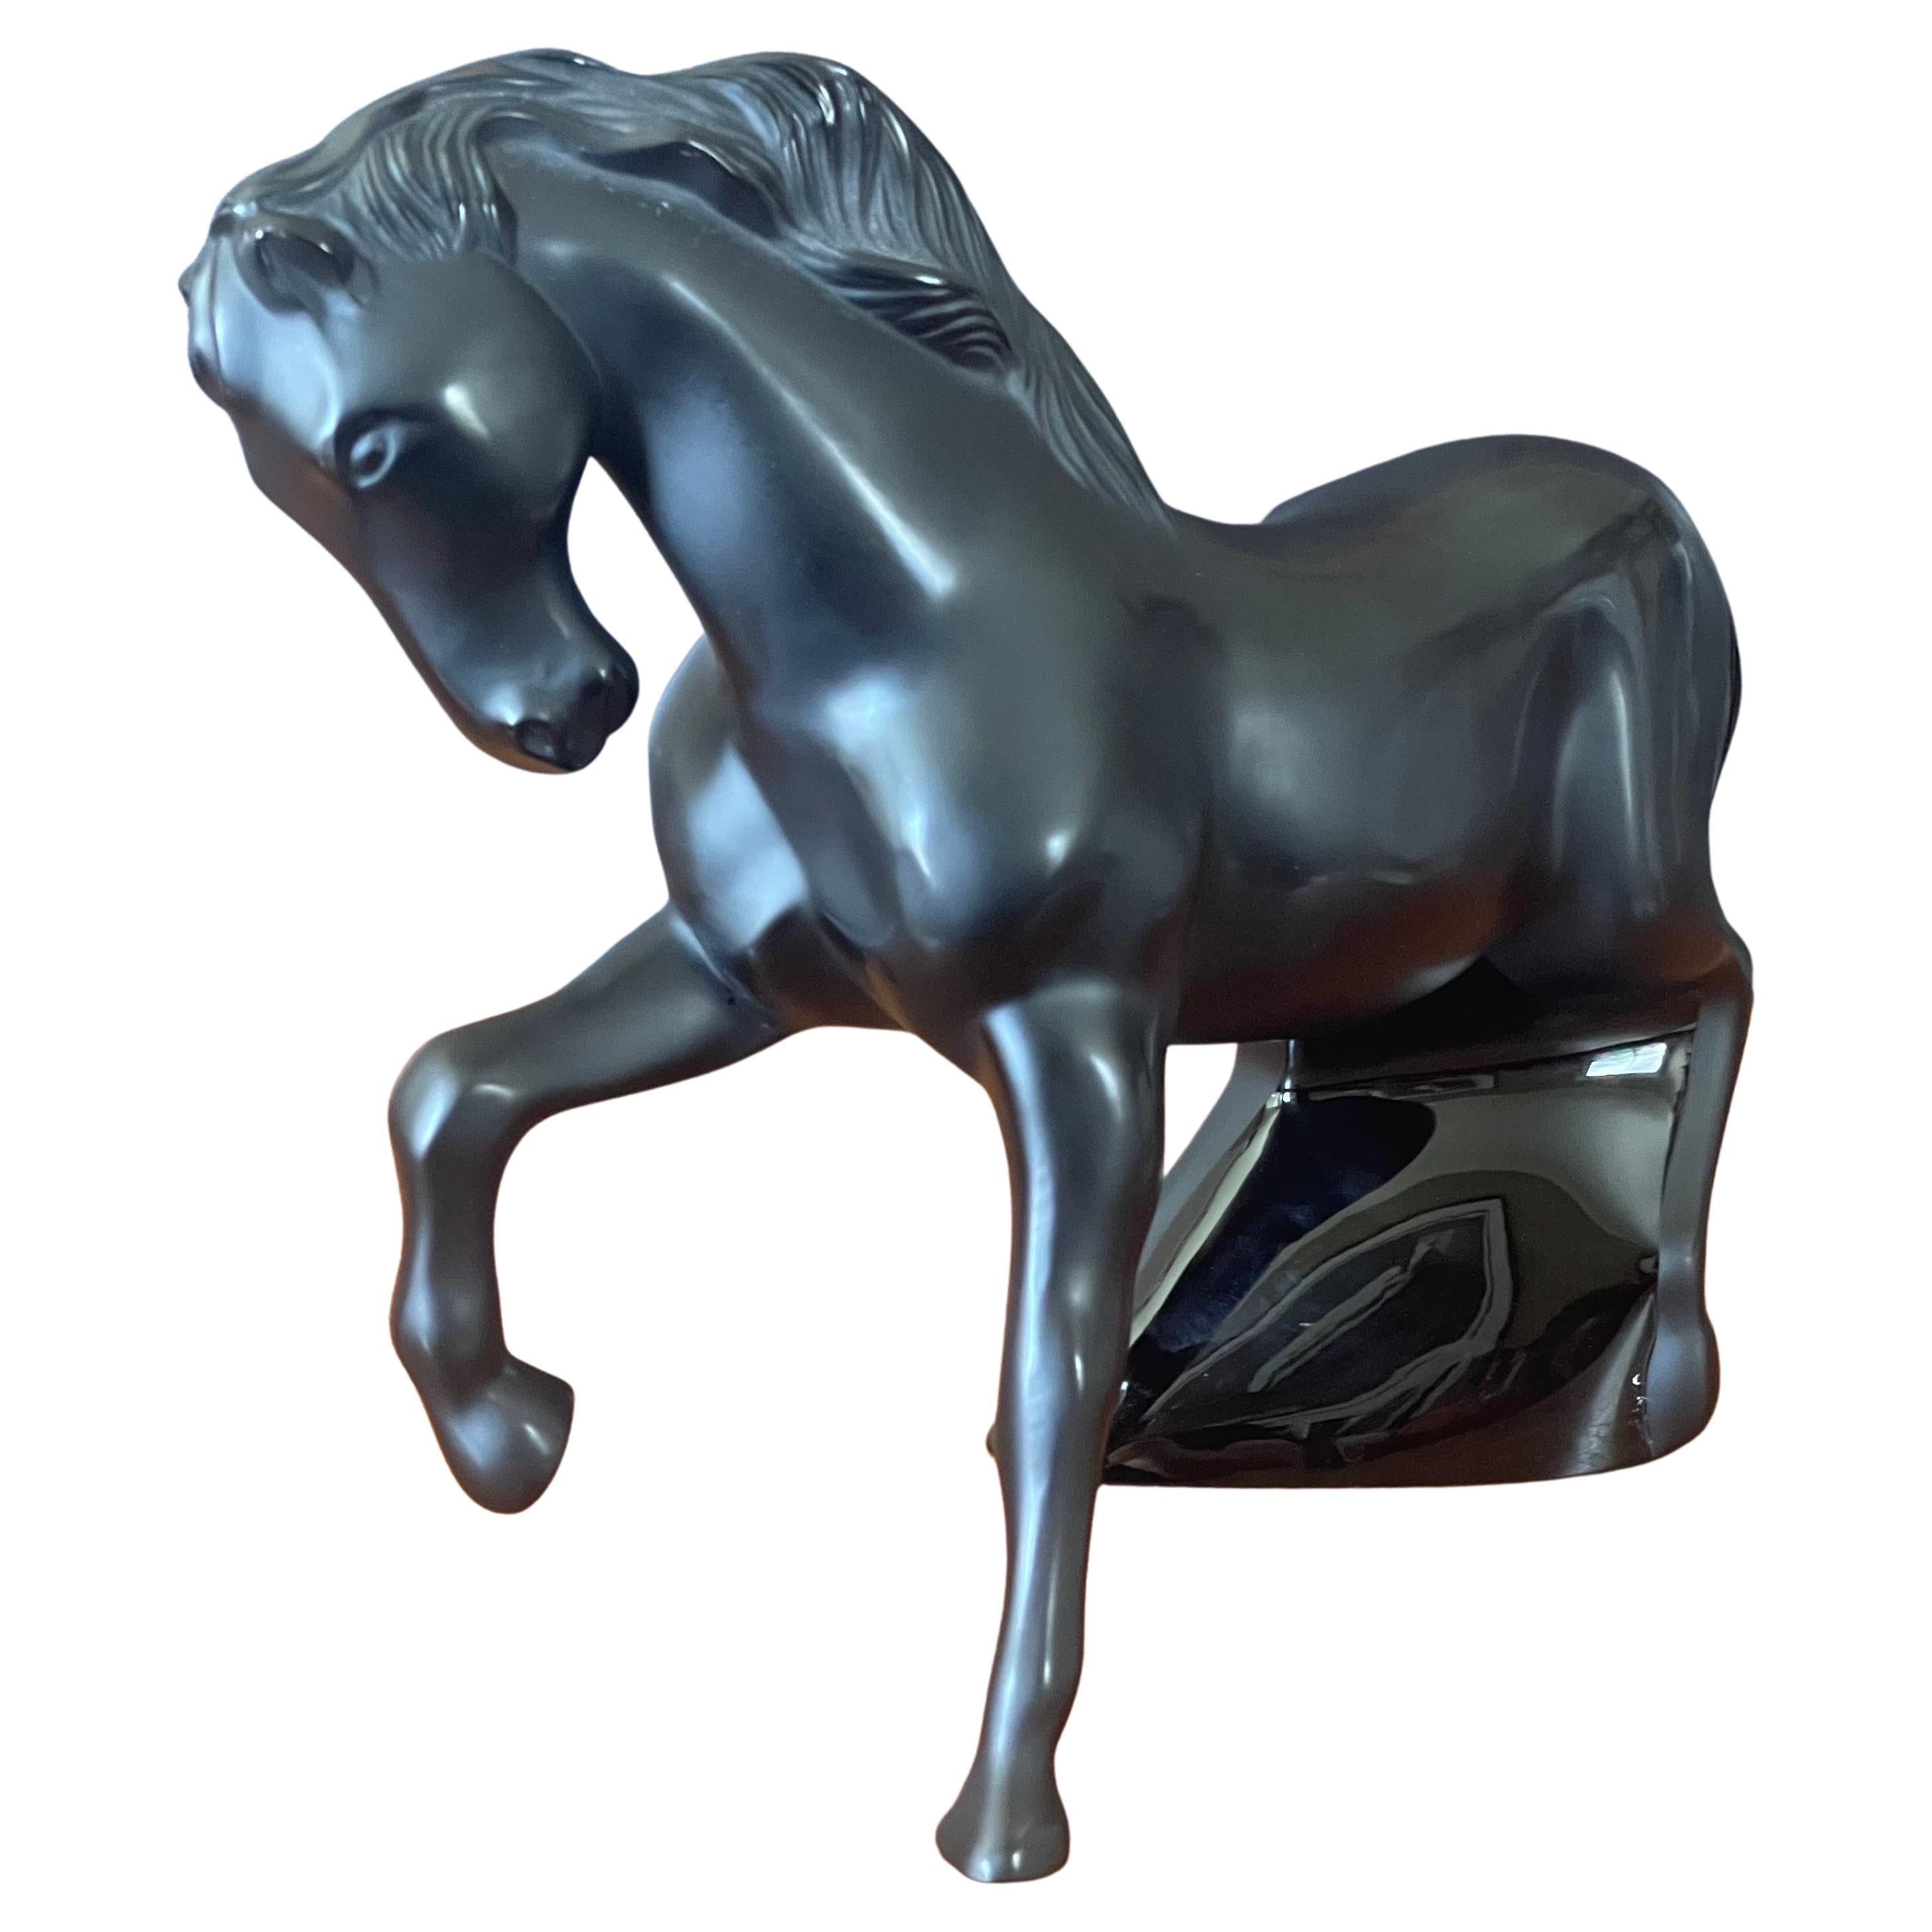 Rare Motif Cheval Mistral Noir Horse / Stallion Sculpture by Lalique of France For Sale